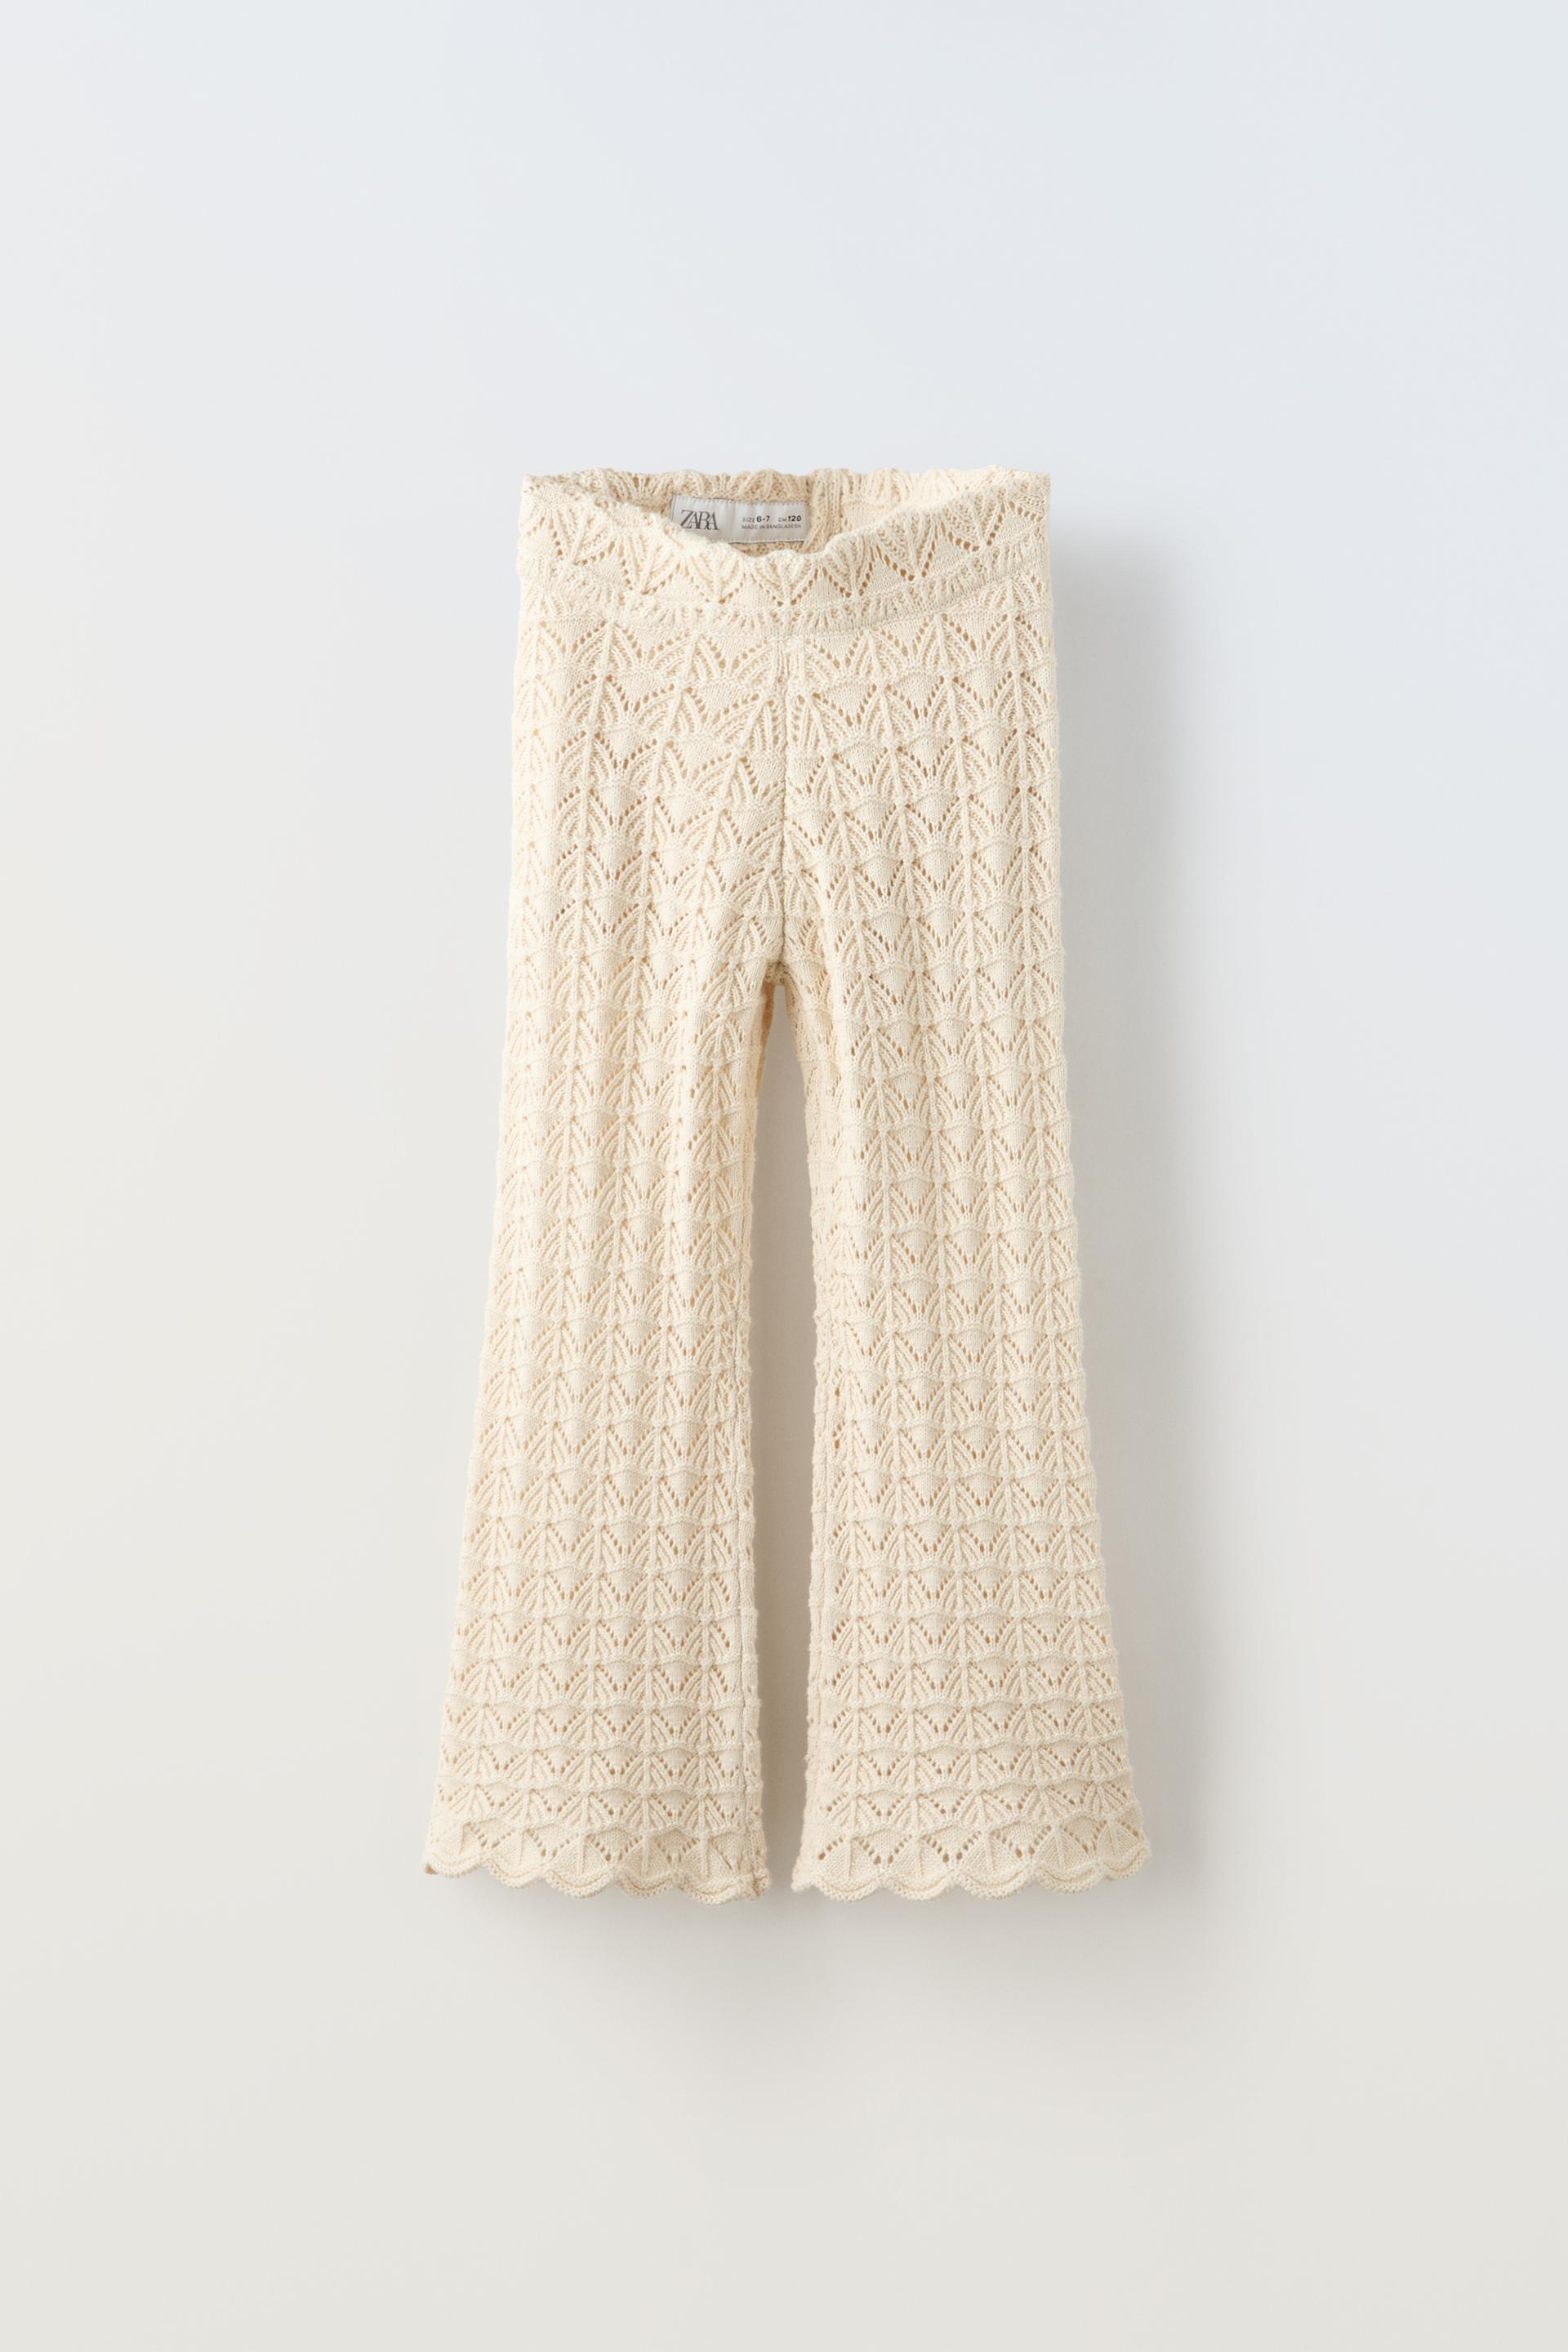 Zara Women's Crochet Pointelle Knit Crochet Pants Size Large Black Bloggers  Fave